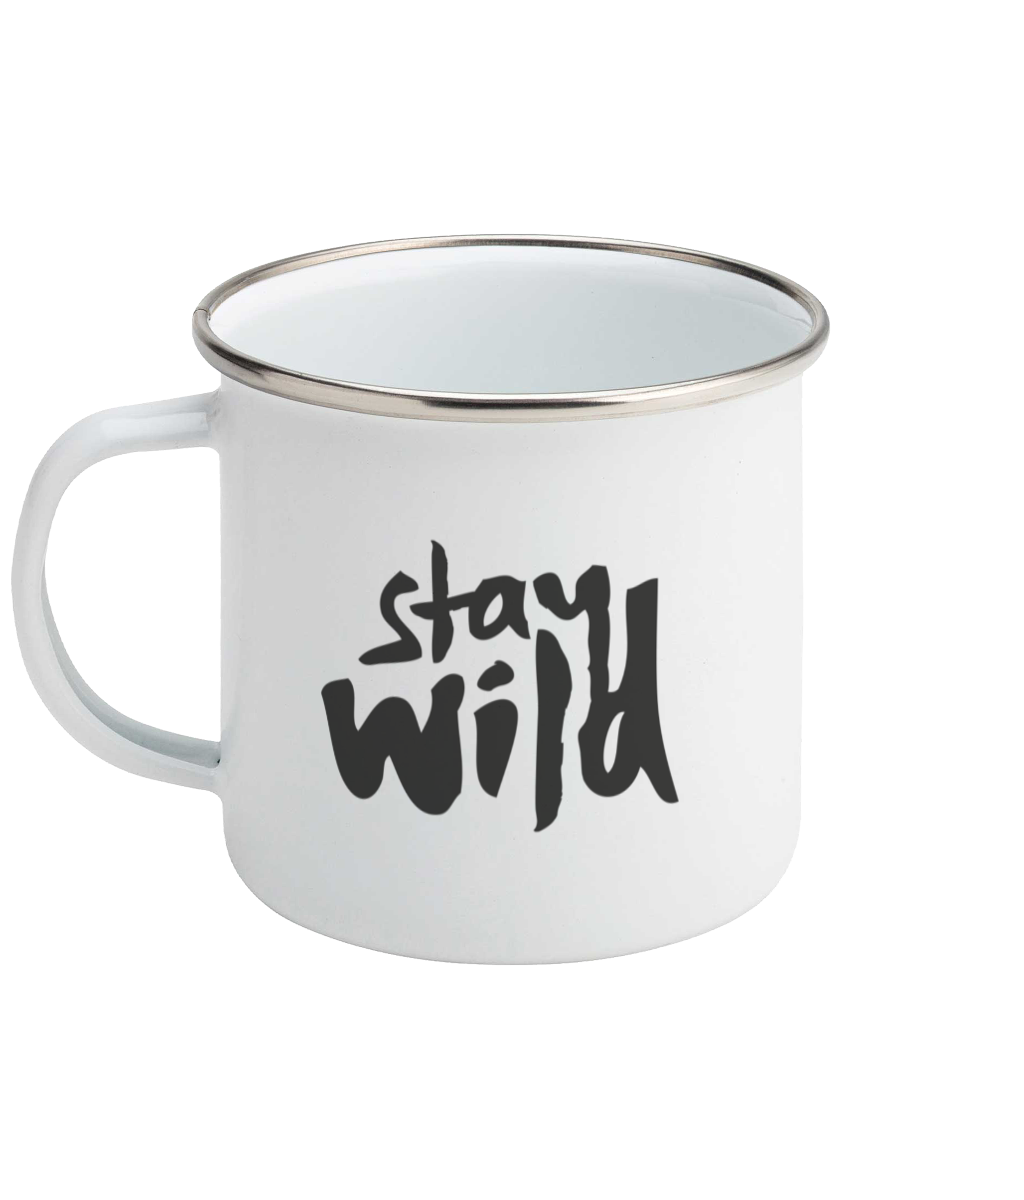 Camping Mug - Stay Wild